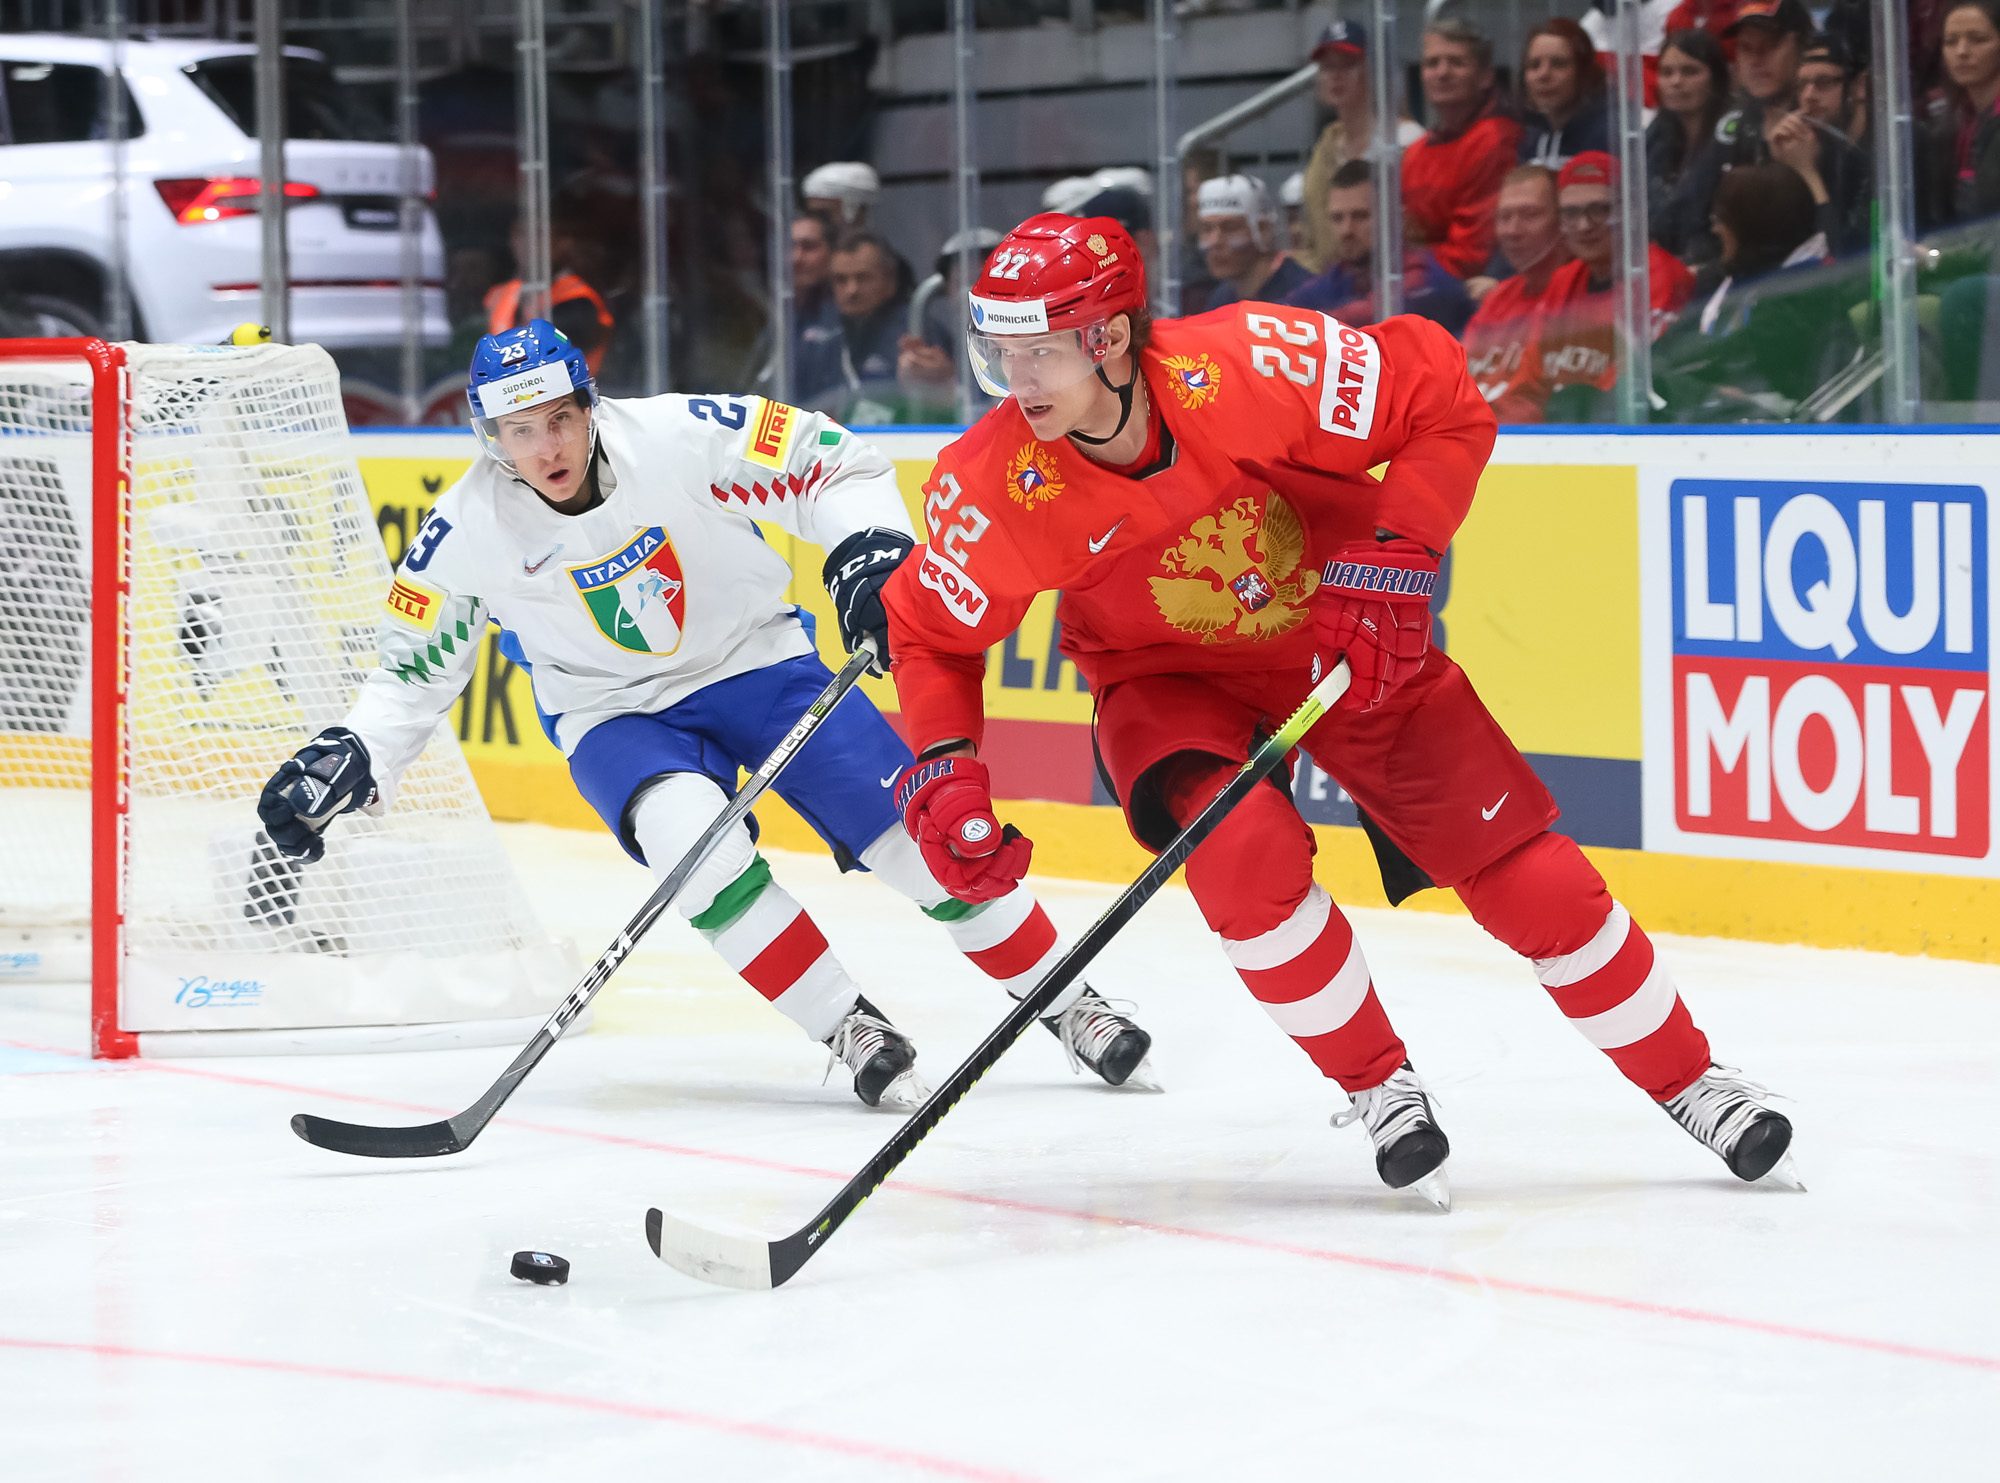 russia hockey jersey 2019